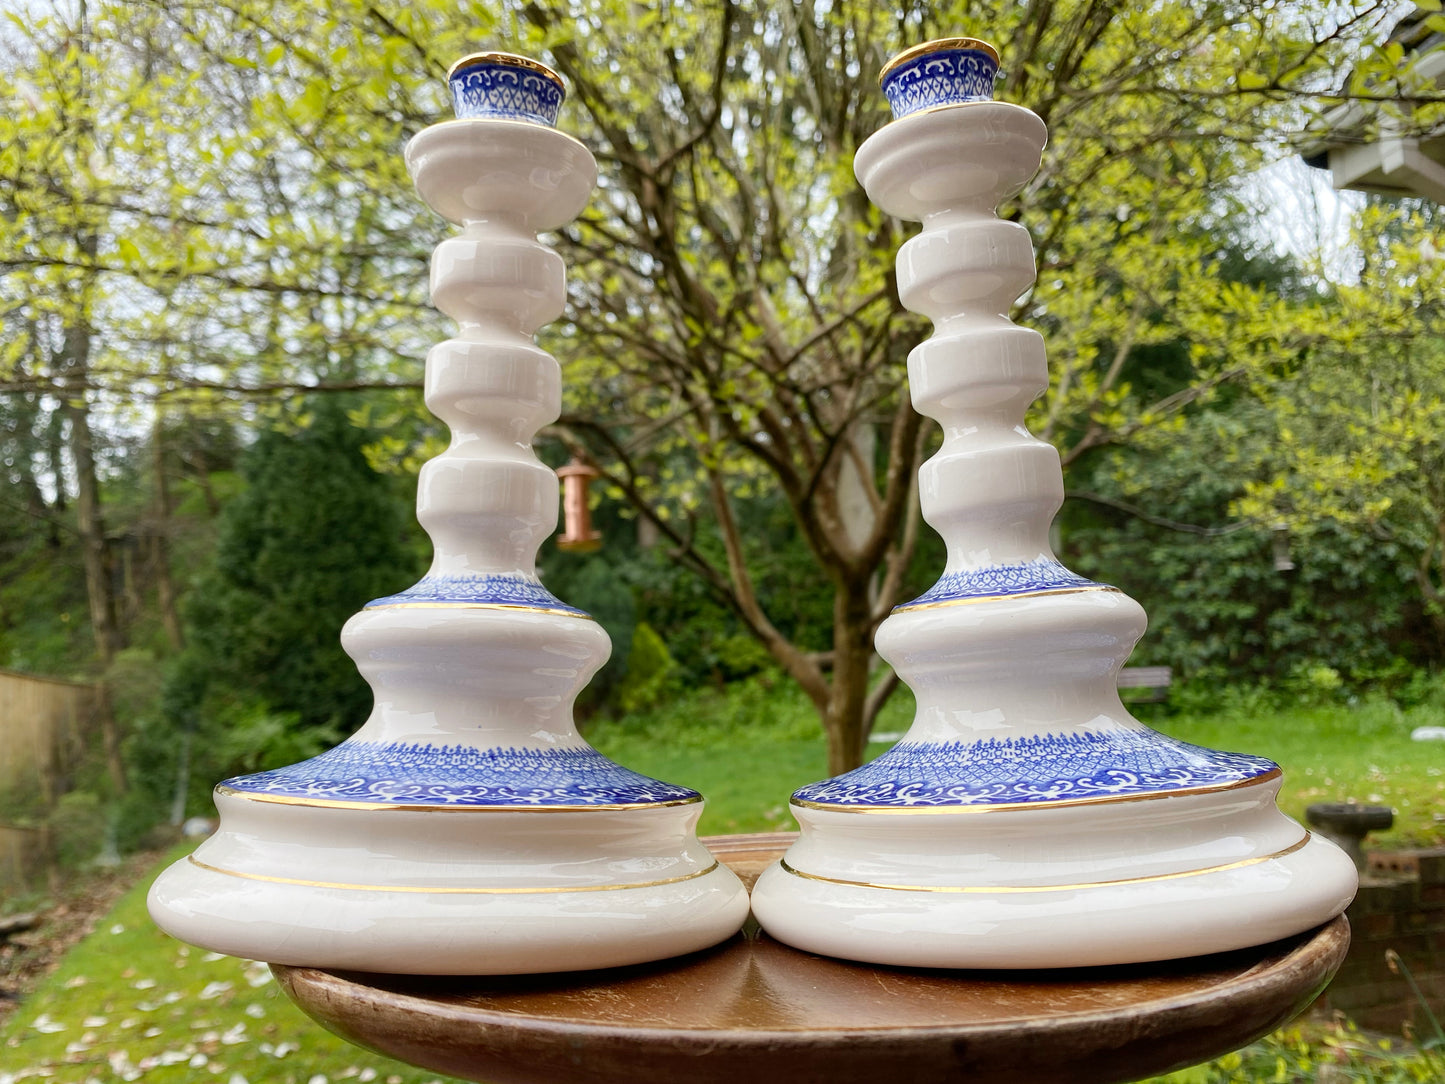 Rare Vintage Scandinavian Norsk Flint Egersund - A Pair of Blue and White Ceramic Candlesticks c1950